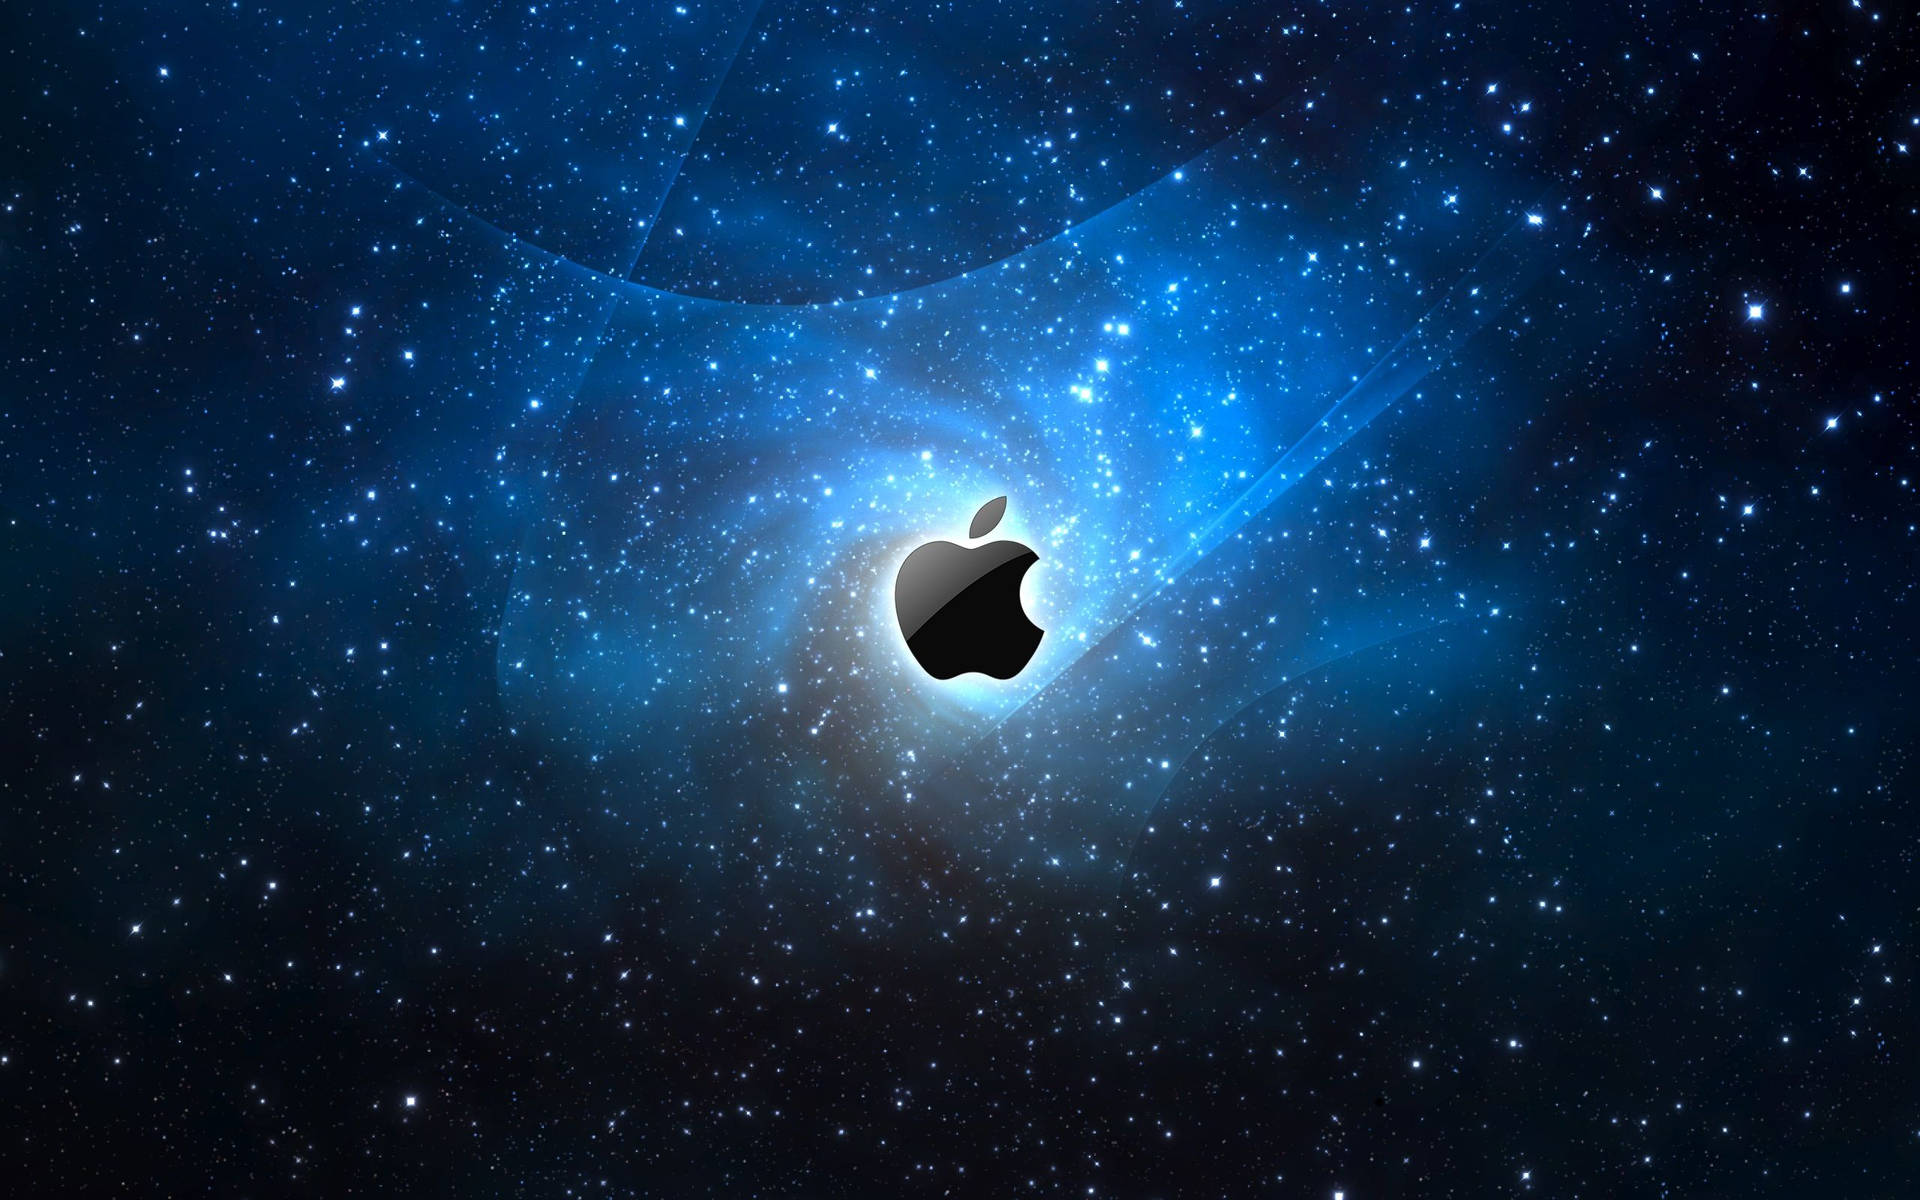 Black Apple Logo Against a Blue Galaxy Wallpaper